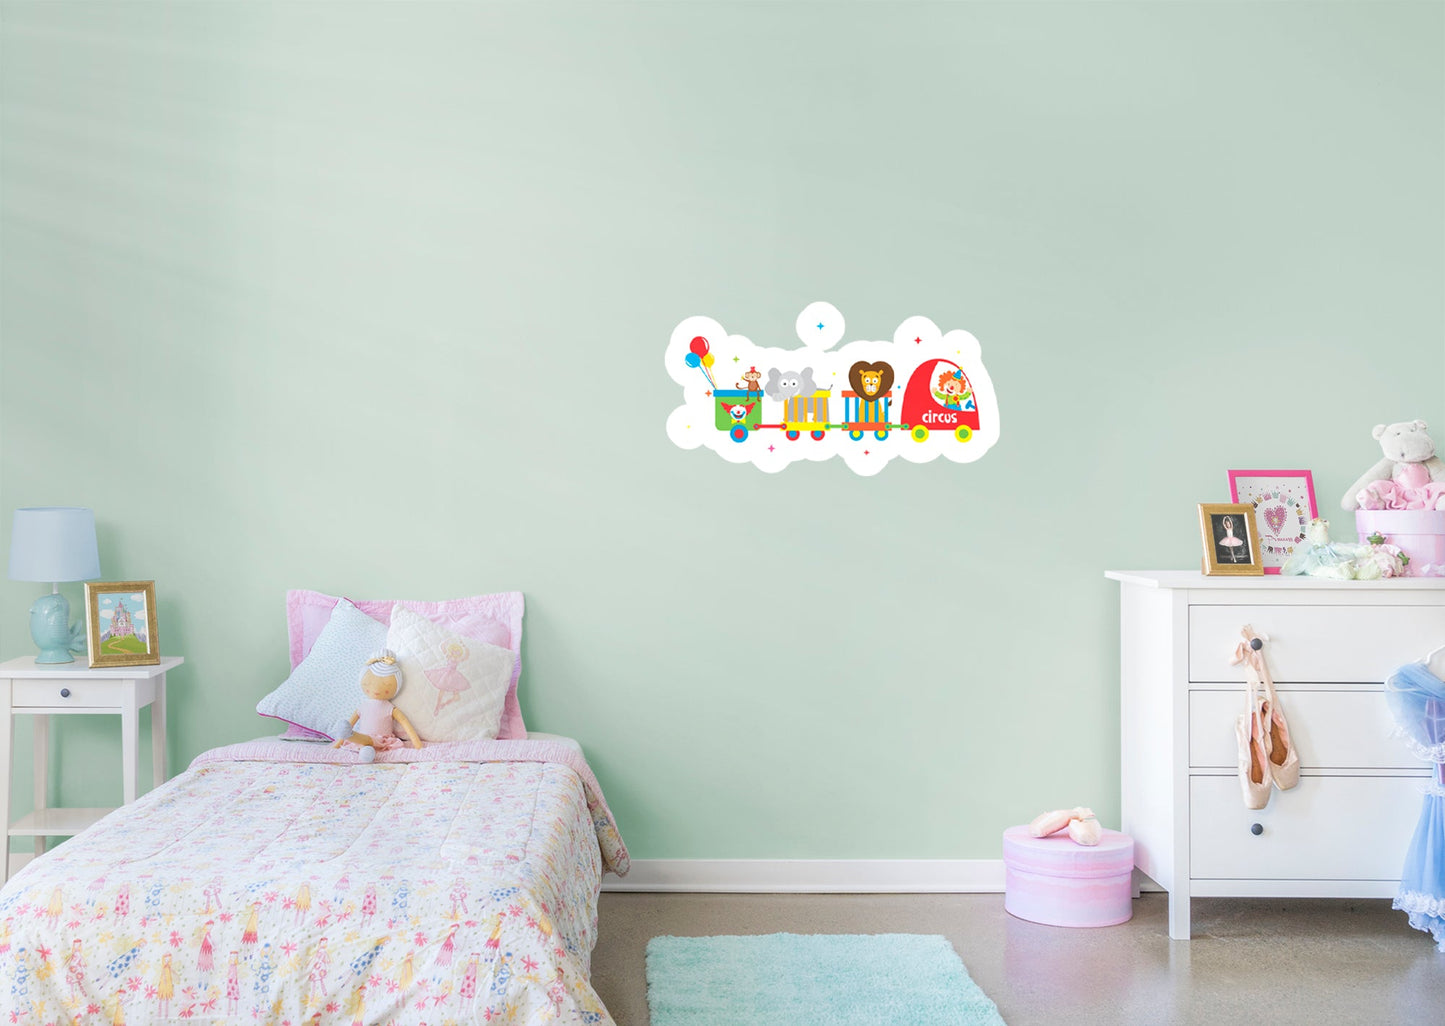 Nursery:  Circus Icon        -   Removable Wall   Adhesive Decal